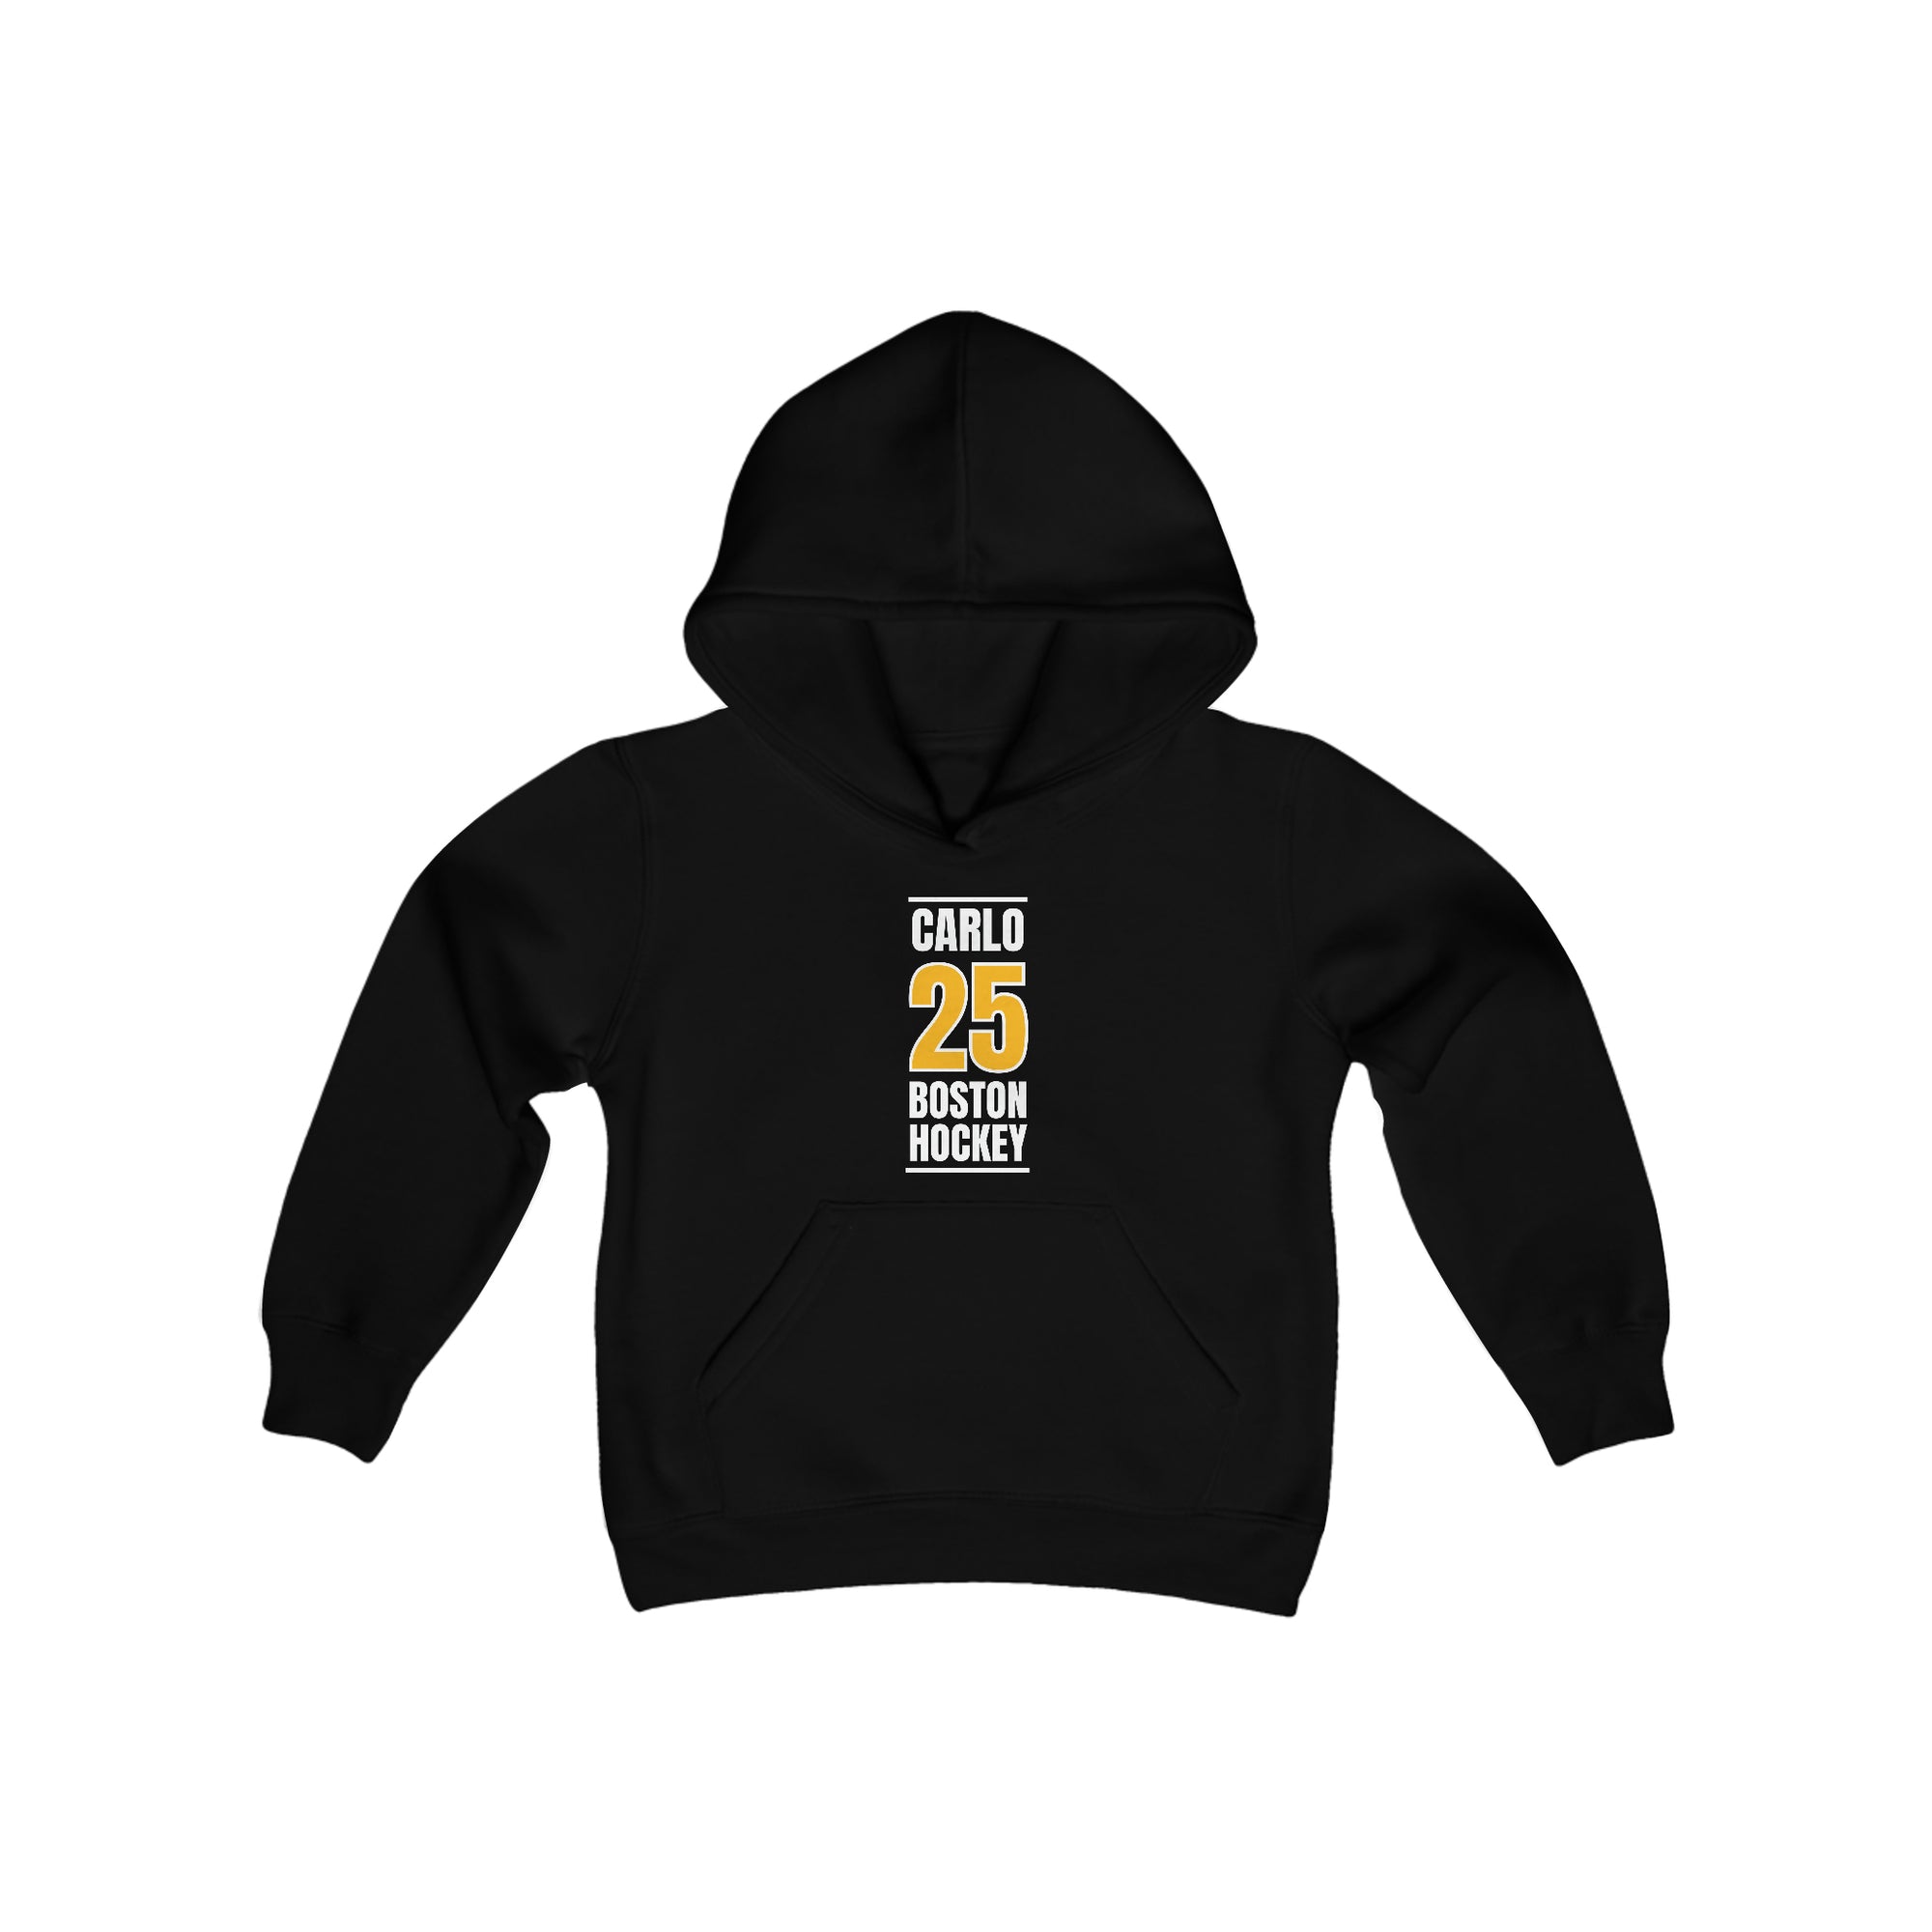 Carlo 25 Boston Hockey Gold Vertical Design Youth Hooded Sweatshirt